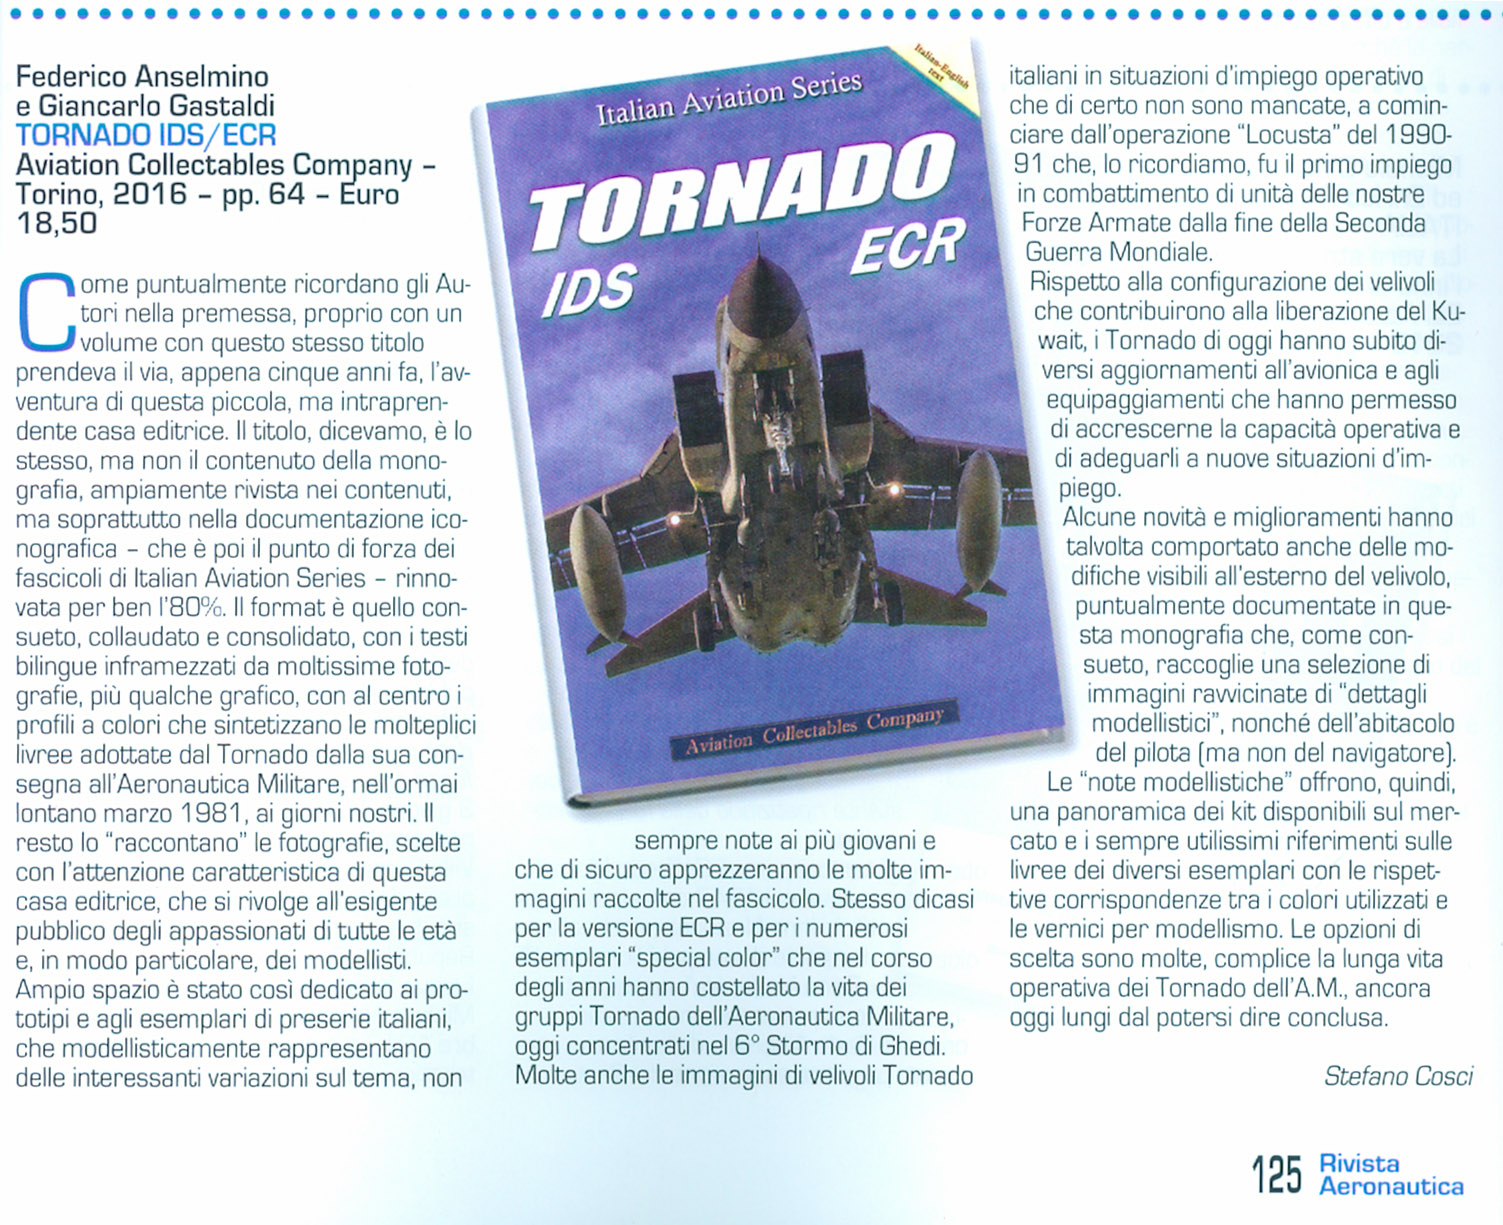 la recensione del libro “Tornado IDS ECR” su Rivista Aeronautica